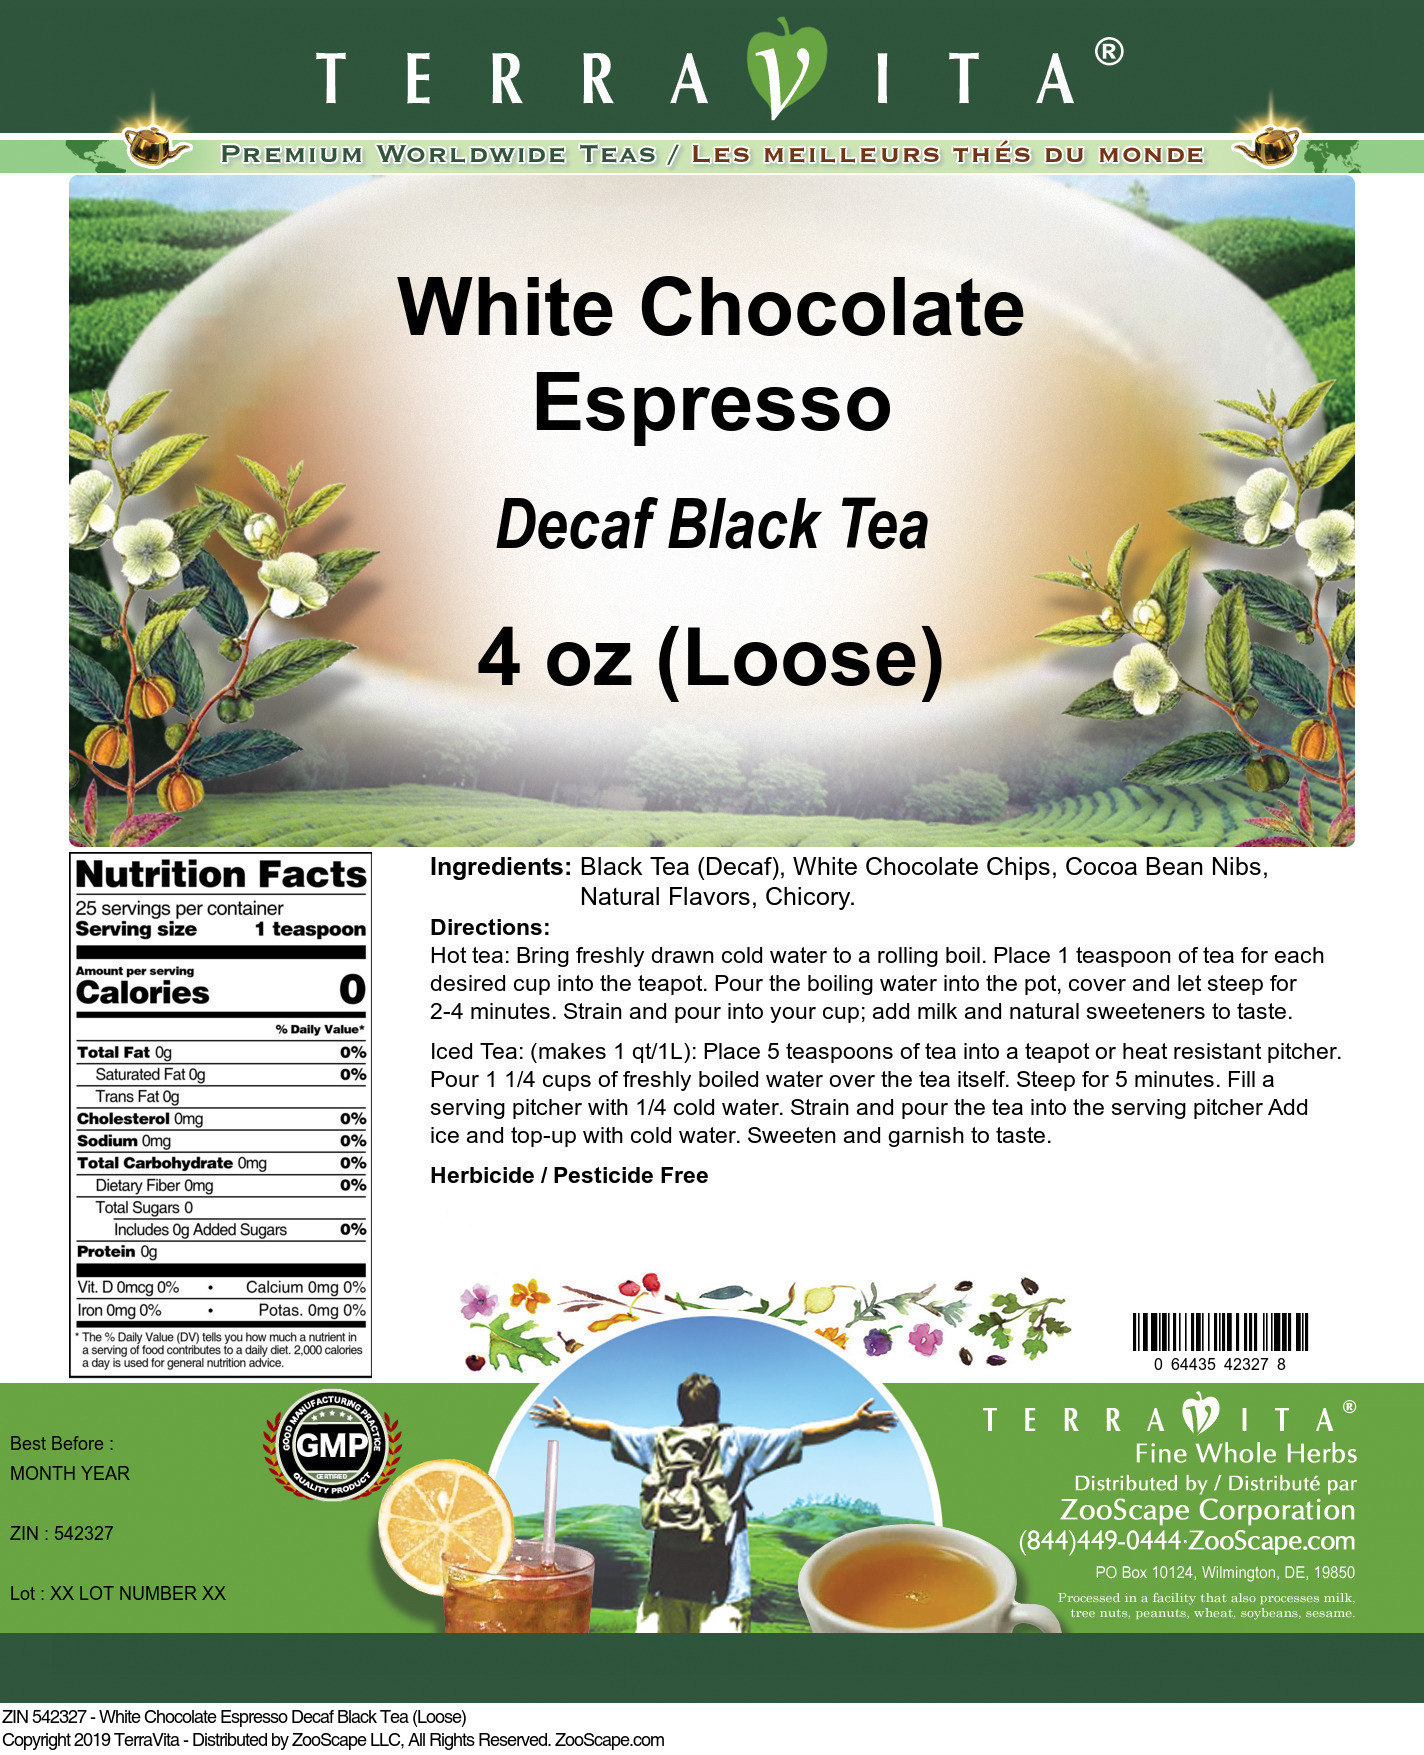 White Chocolate Espresso Decaf Black Tea (Loose) - Label